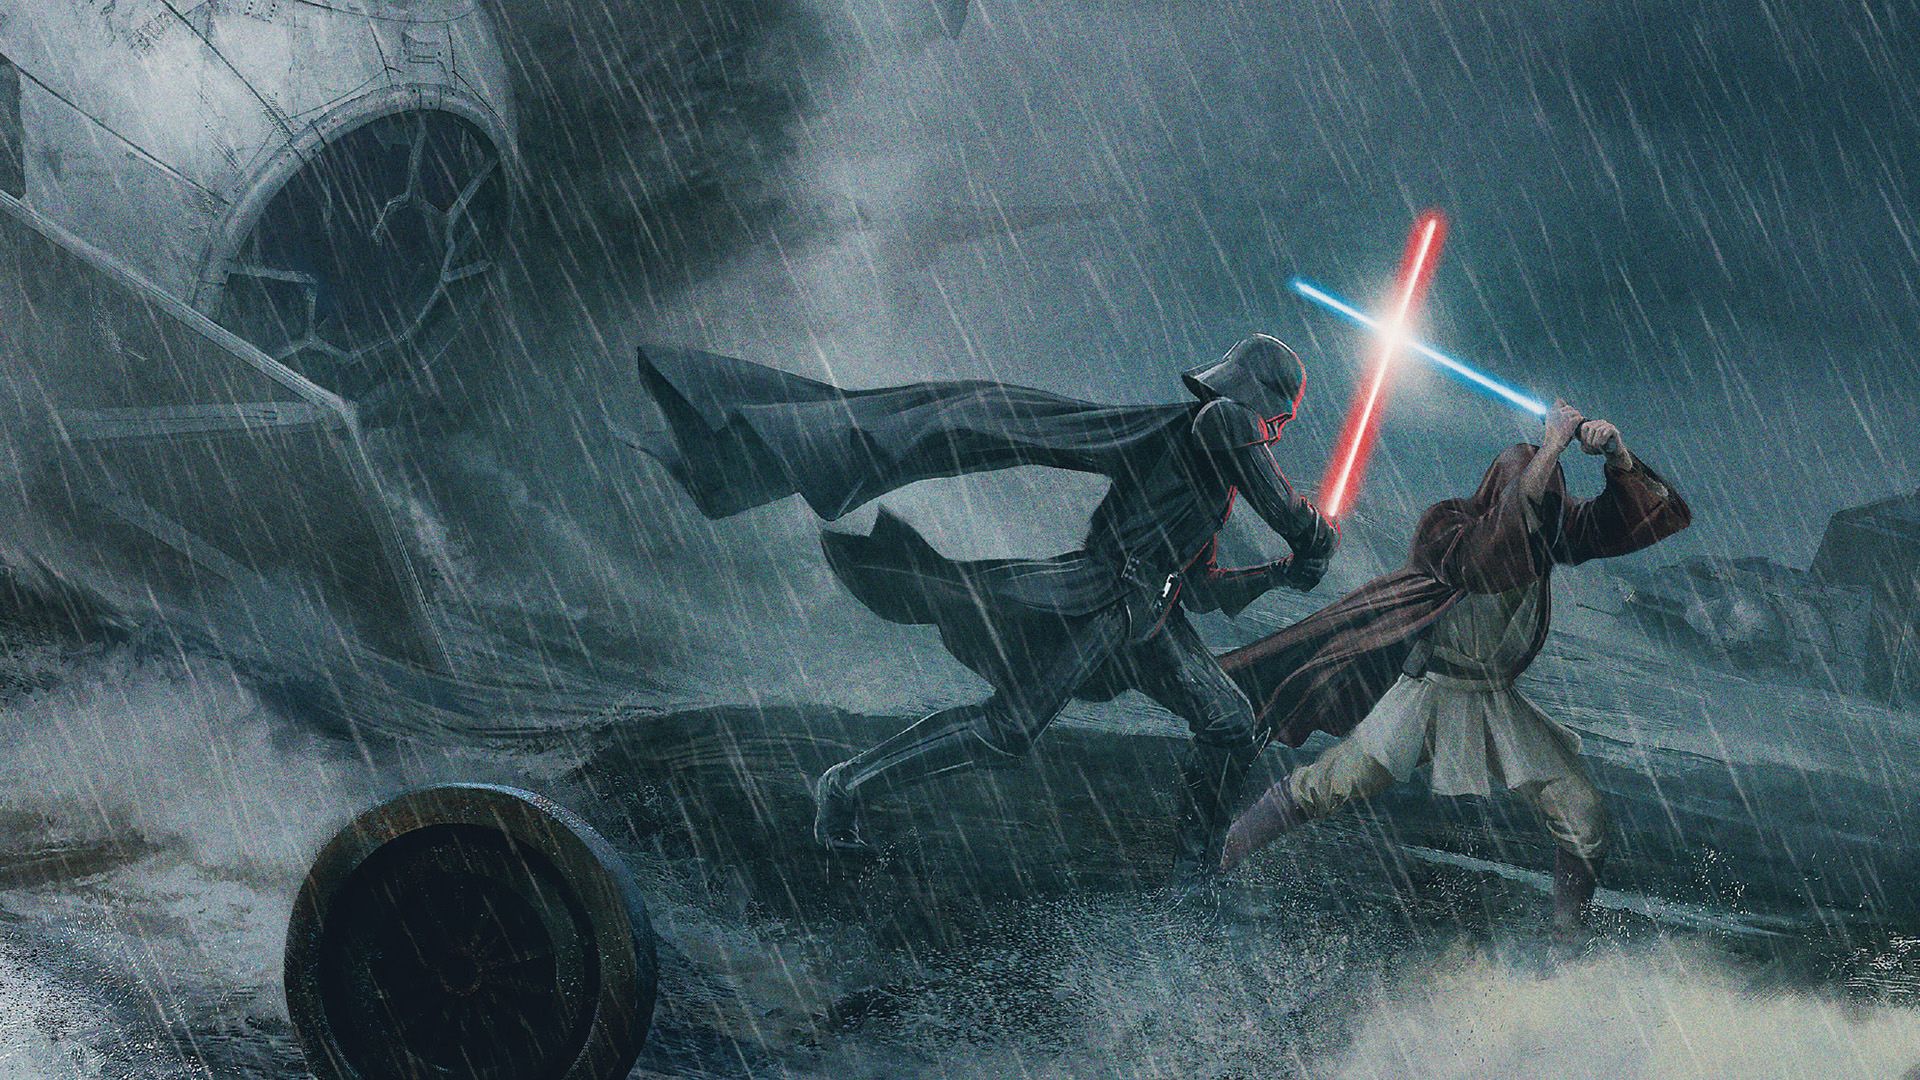 Obi Wan Kenobi Vs Anakin Skywalker Desktop Wallpapers - Wallpaper Cave